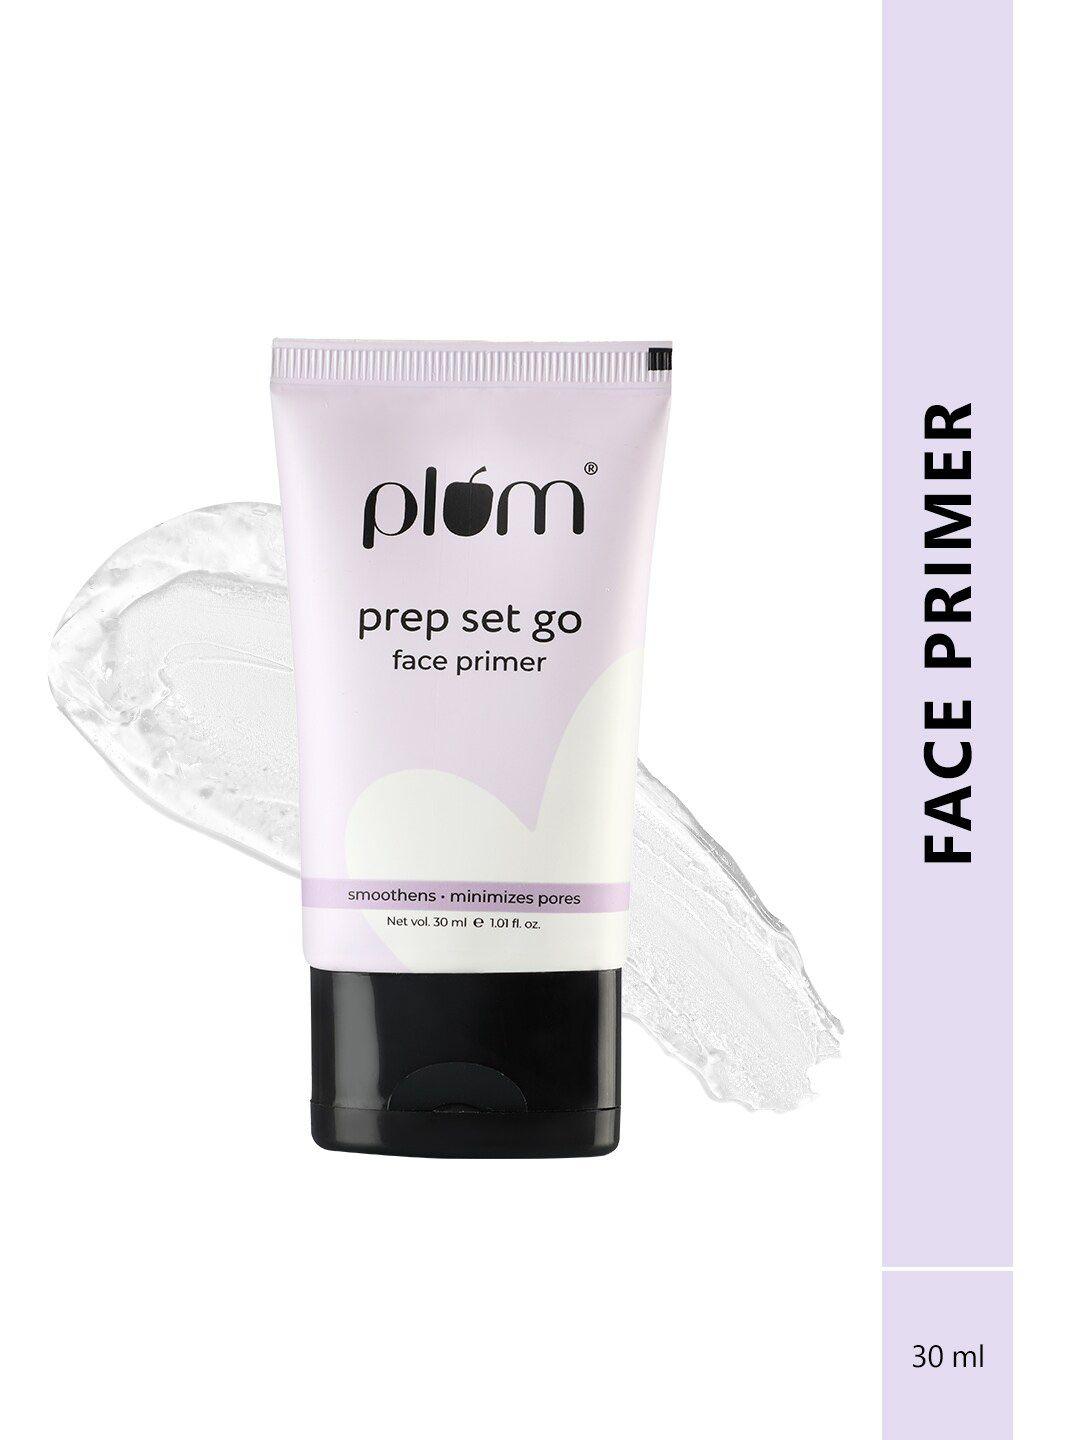 plum prep set go matte face primer - minimizes pores - weightless formula - vegan - 30ml